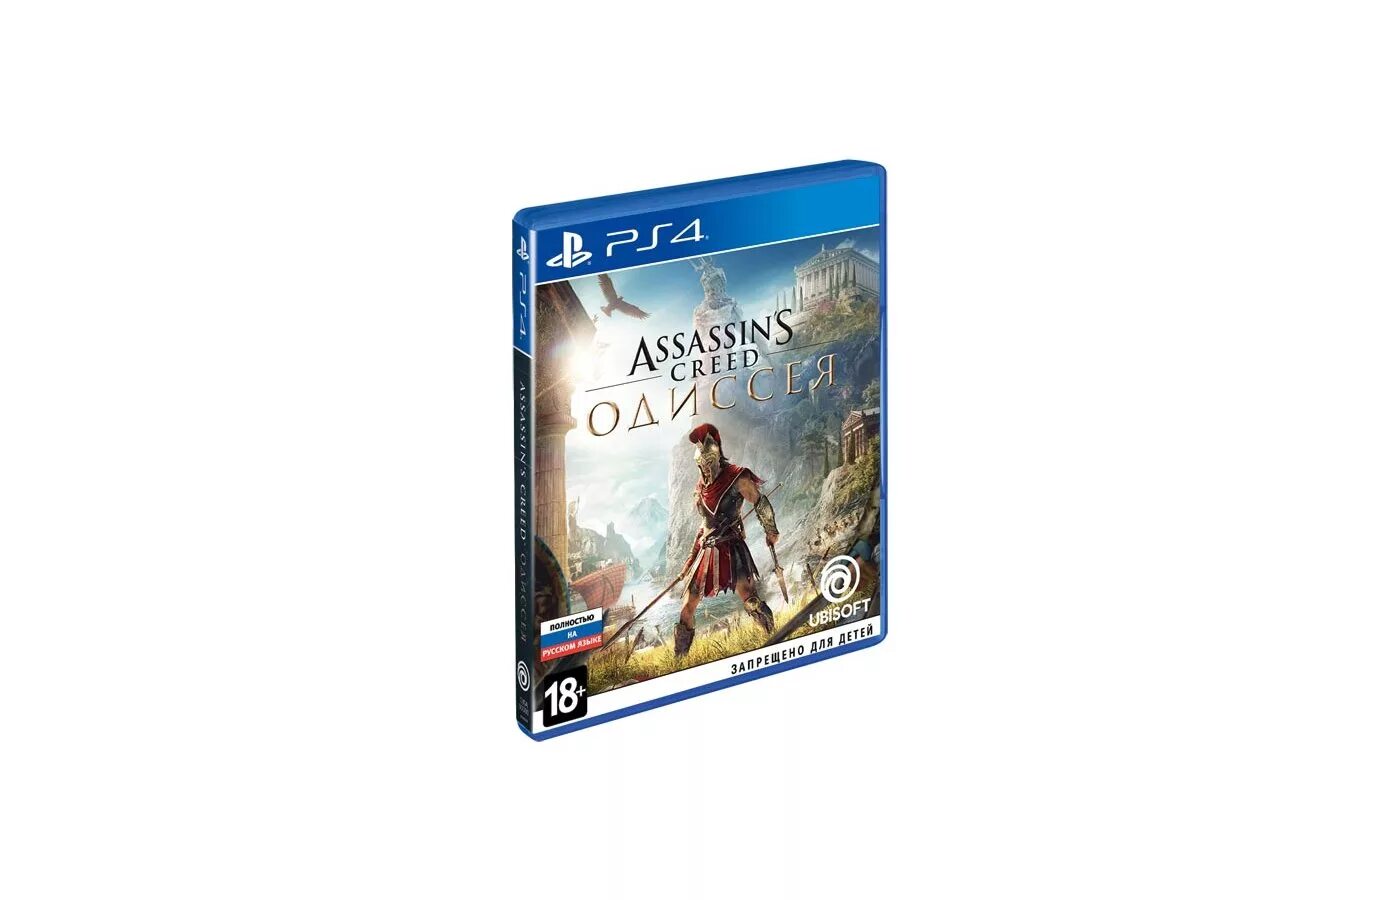 Ассасин Крид Одиссея диск ПС 4. Диск на ПС 4 ассасин Крид Odyssey. Assassin's Creed Одиссея ps4. Ps4 диск Assassins Creed. Игры ps4 assassins creed